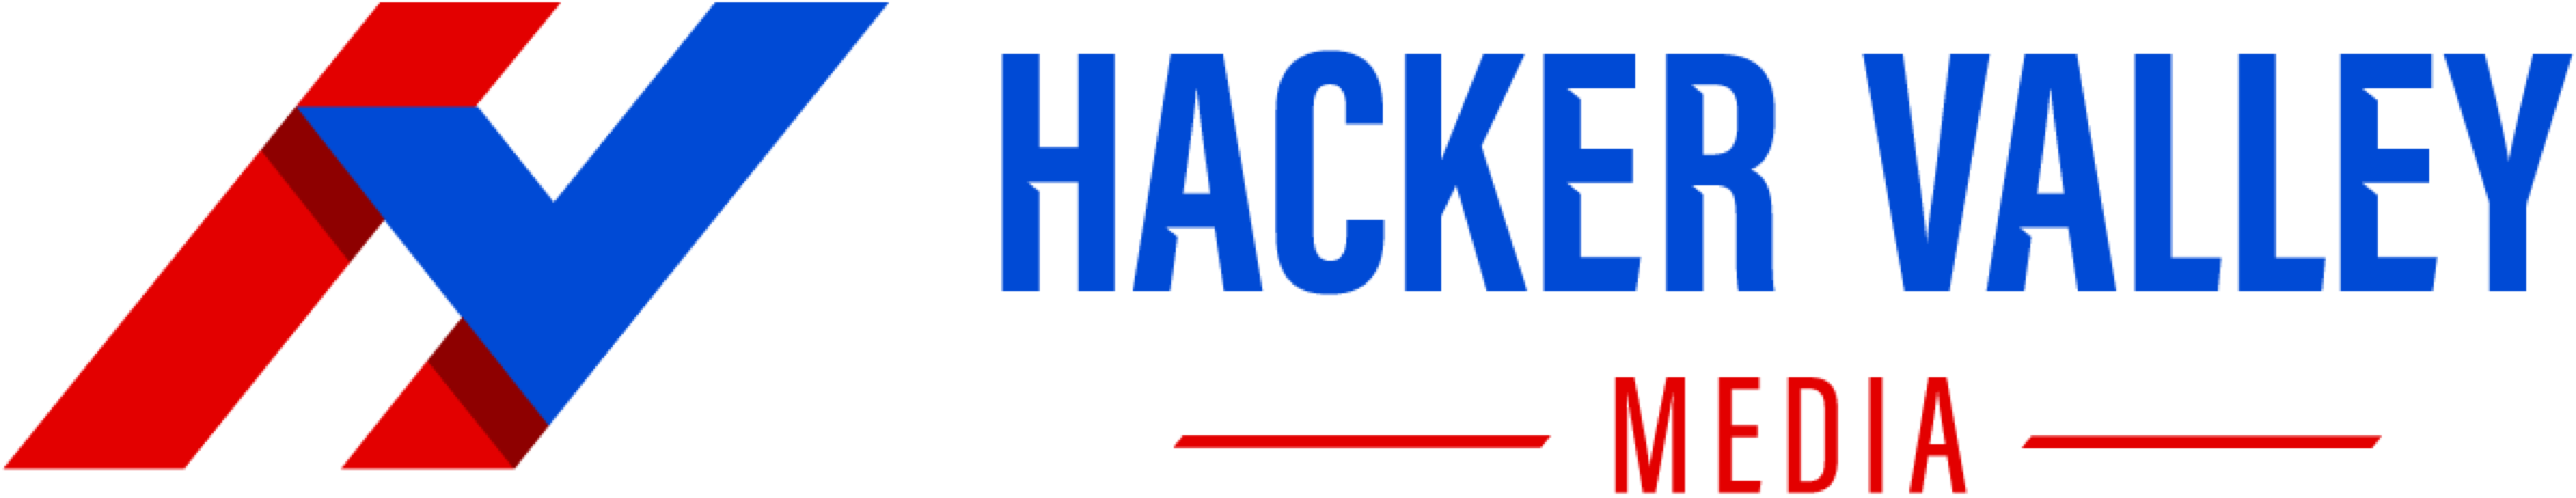 Hacker Valley Media: Keeping It Open Source with Metasploit’s HD Moore